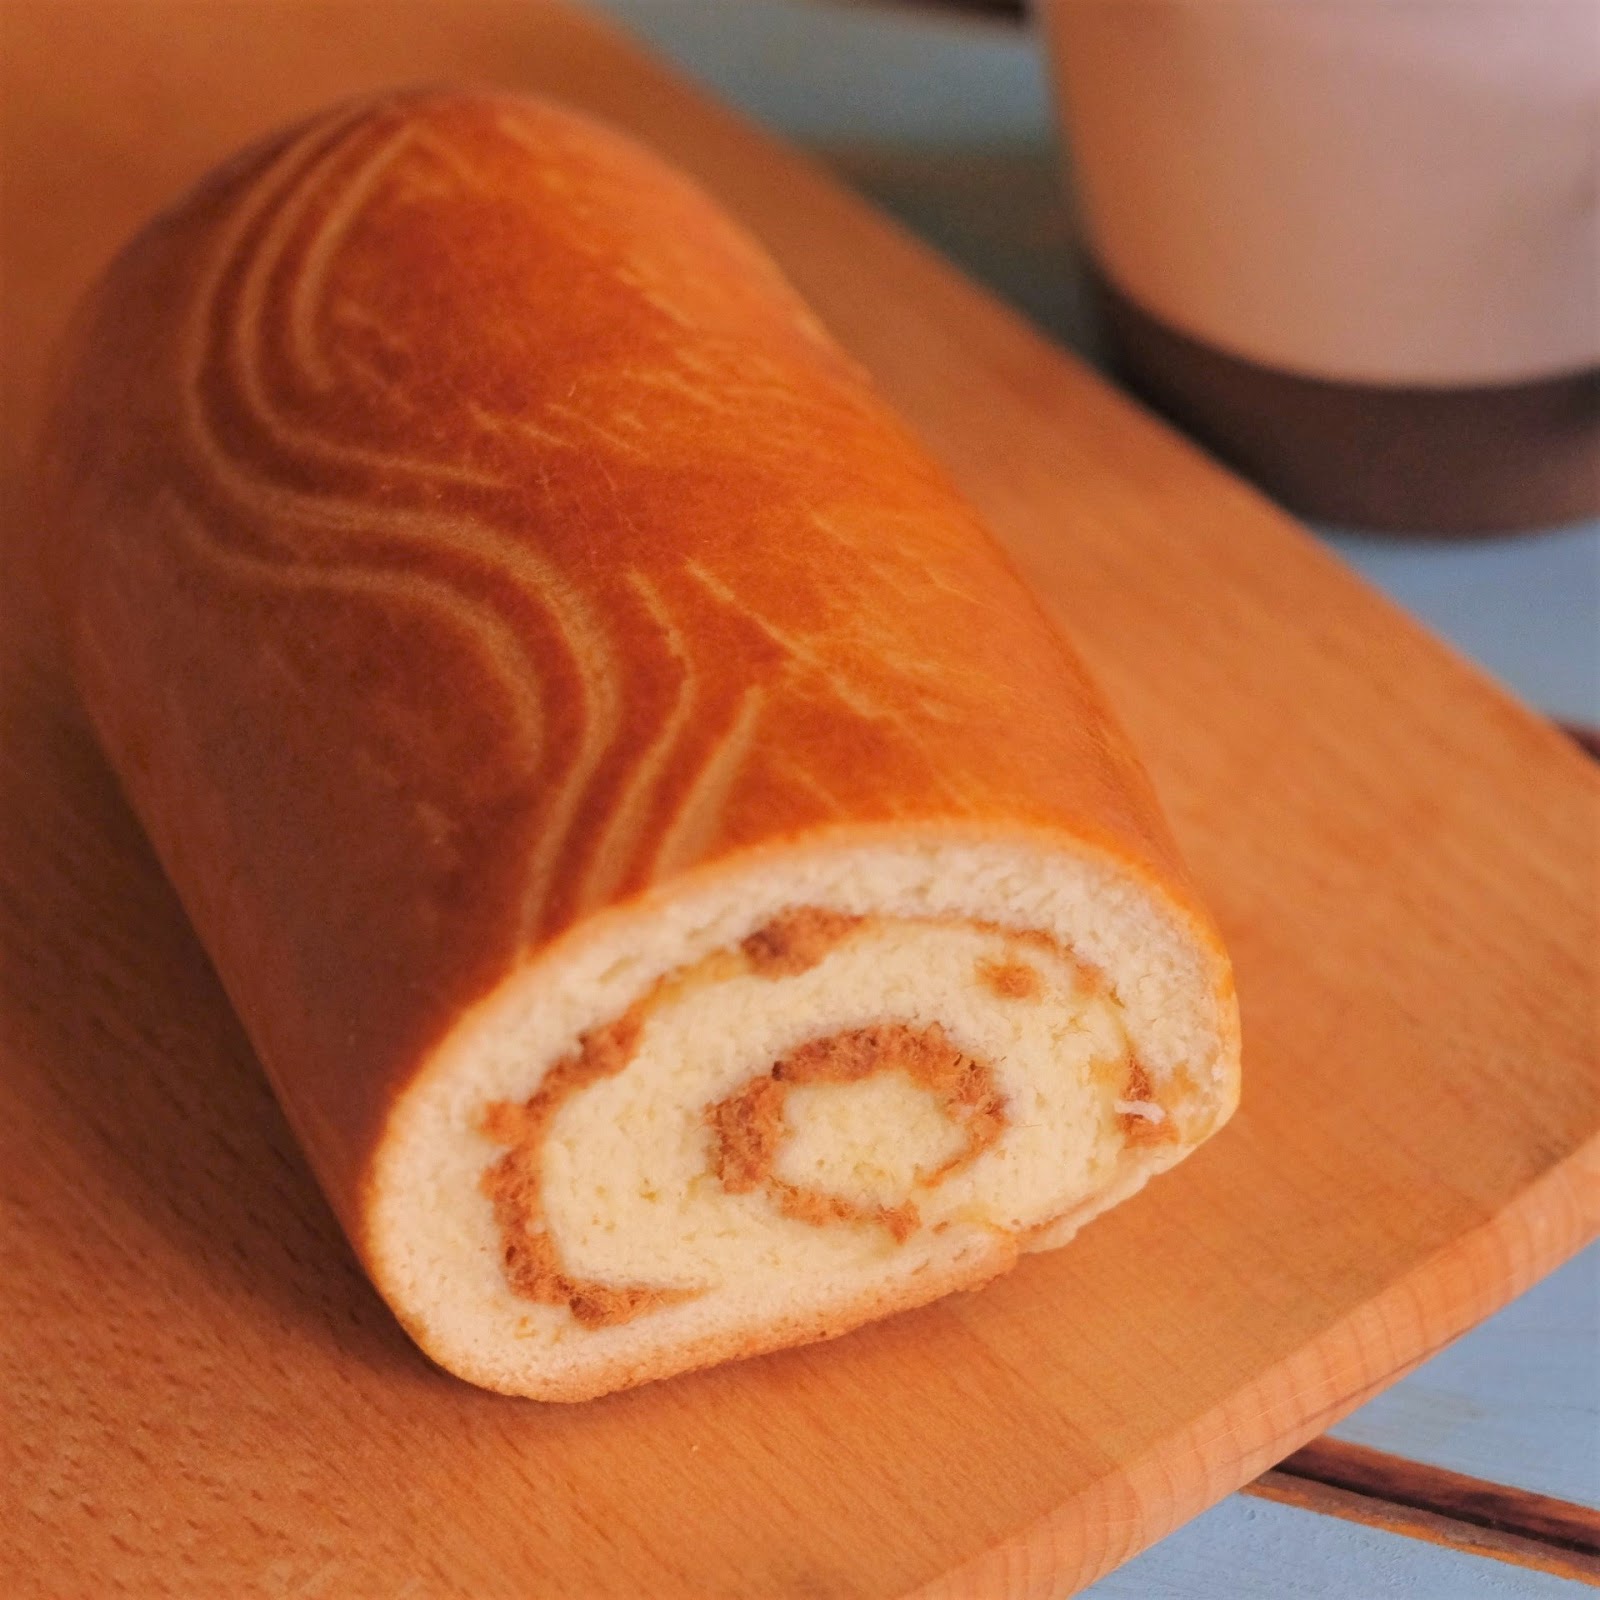 木材麵包做法 免壓麵機 How To Make Taiwanese Wood Bread Cooking23s 美食二三事 食譜 做法 推薦